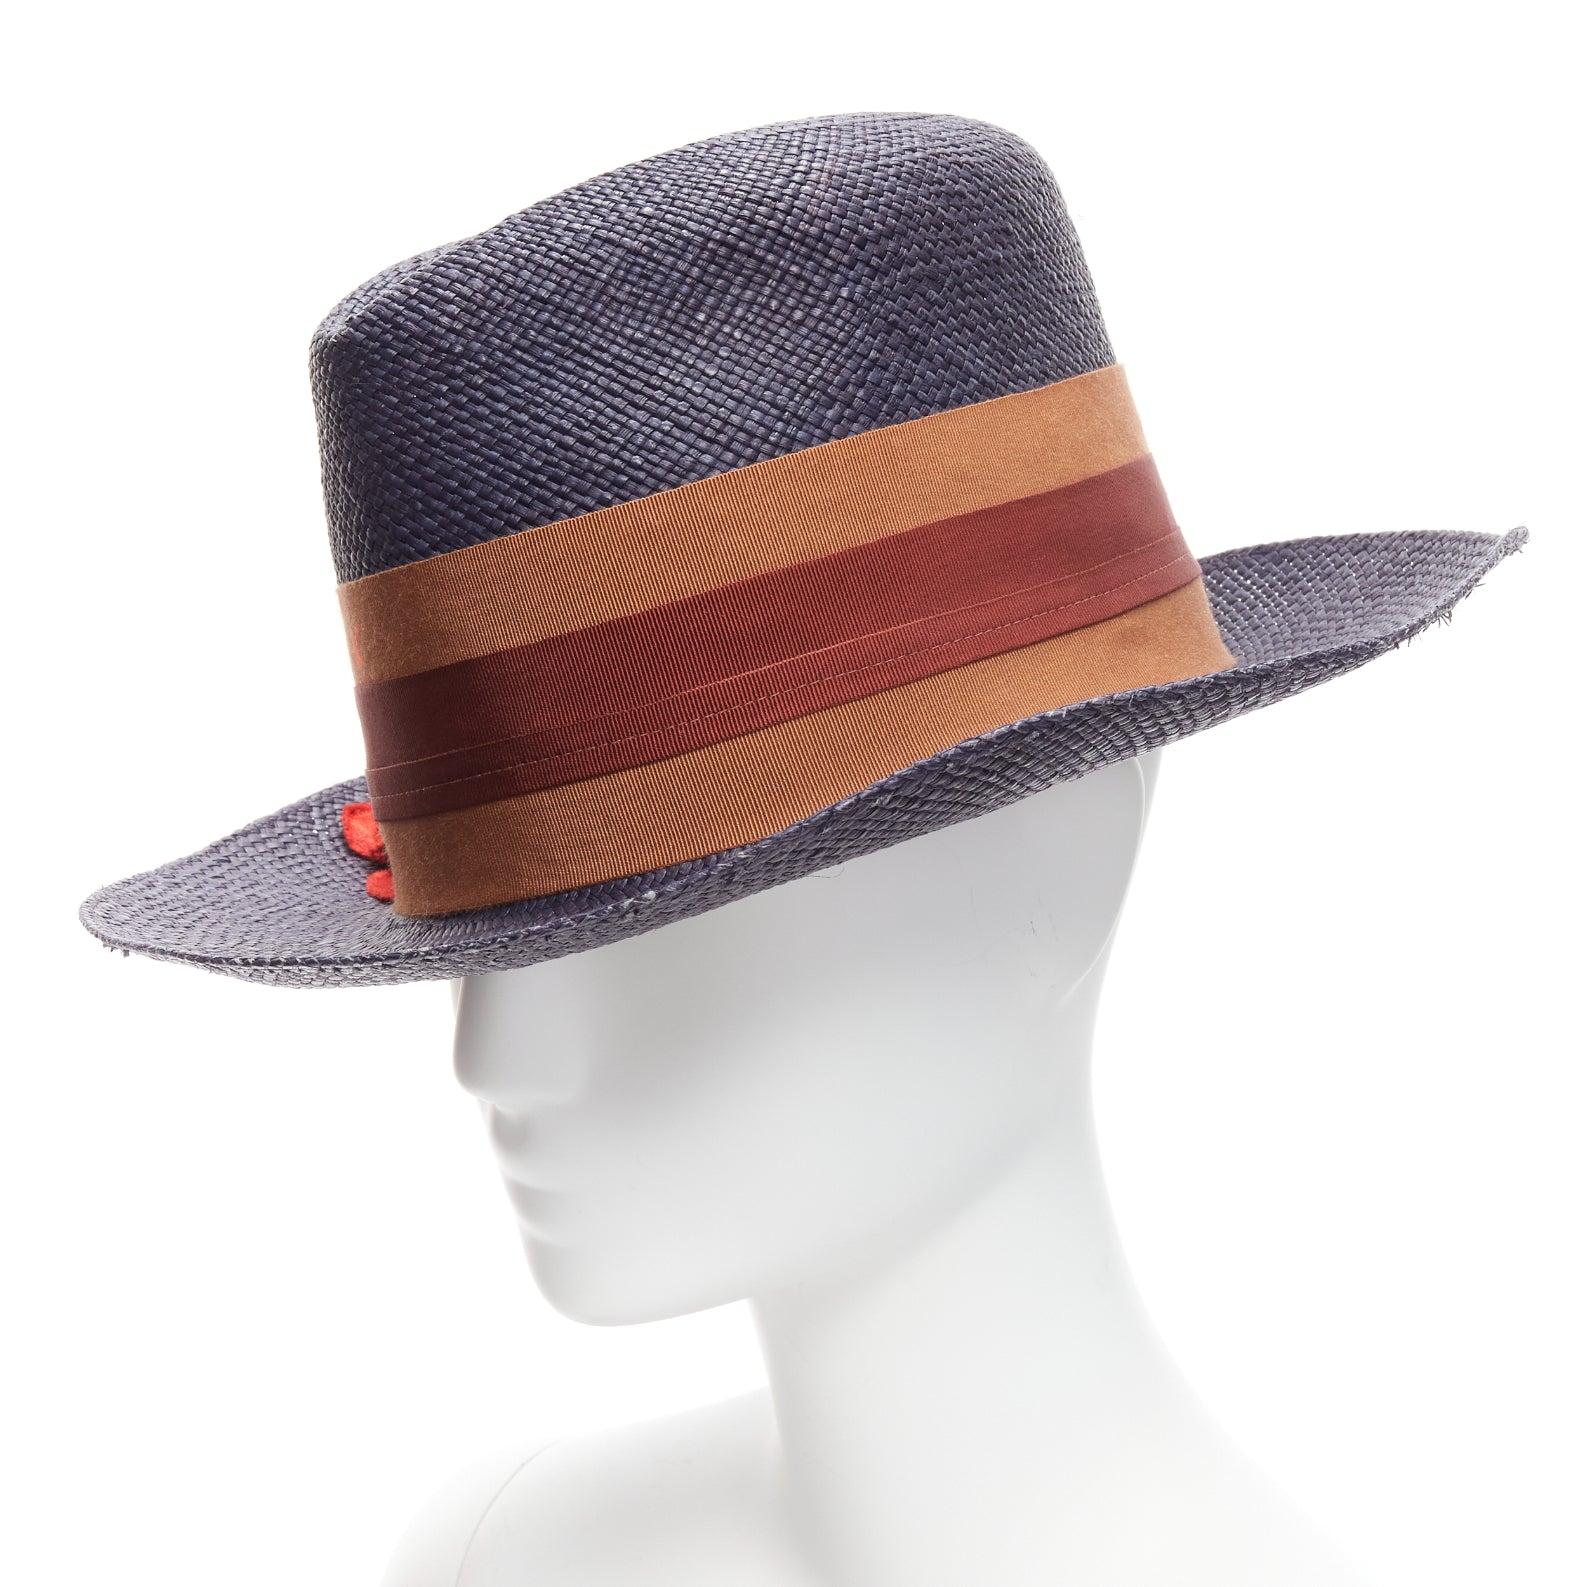 LANVIN 2015 Alber Elbaz red flower brown web ribbon navy straw fedora hat M For Sale 2